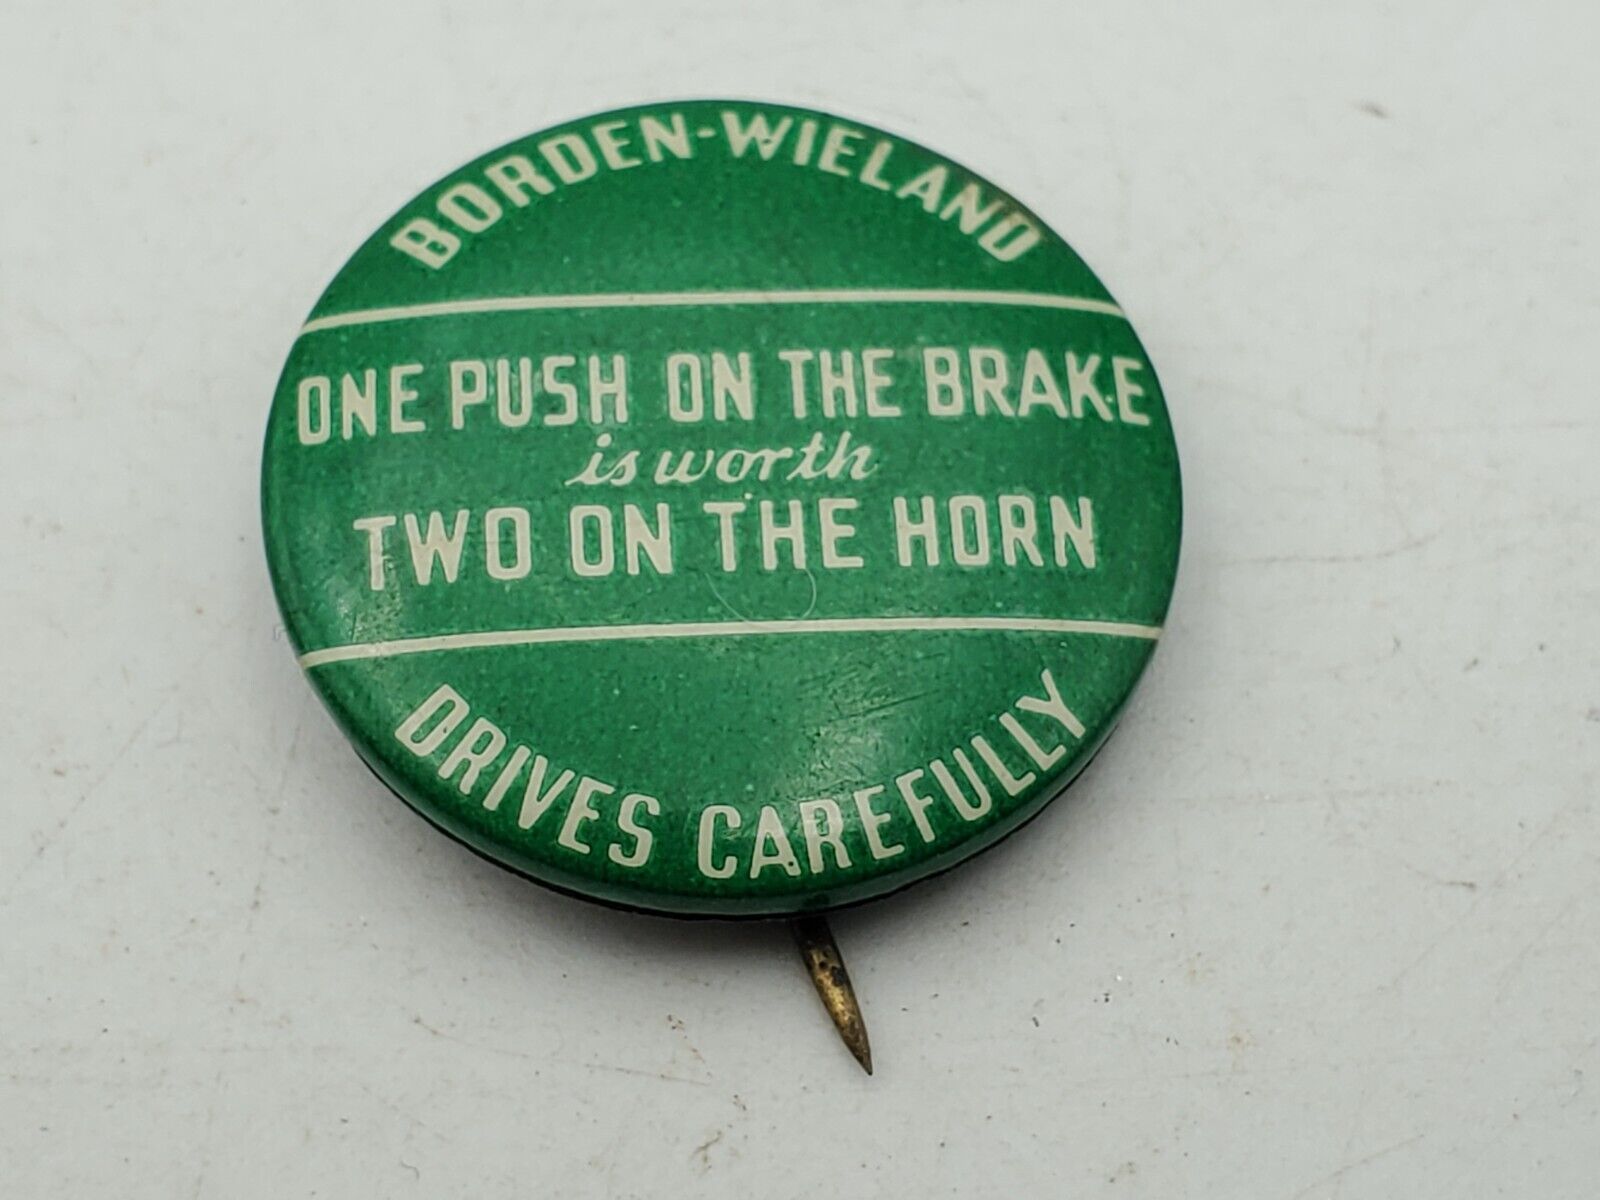 BORDEN-WIELAND DAIRY Advertising Pinback Badge Button Pin Scarce Rare Vintage